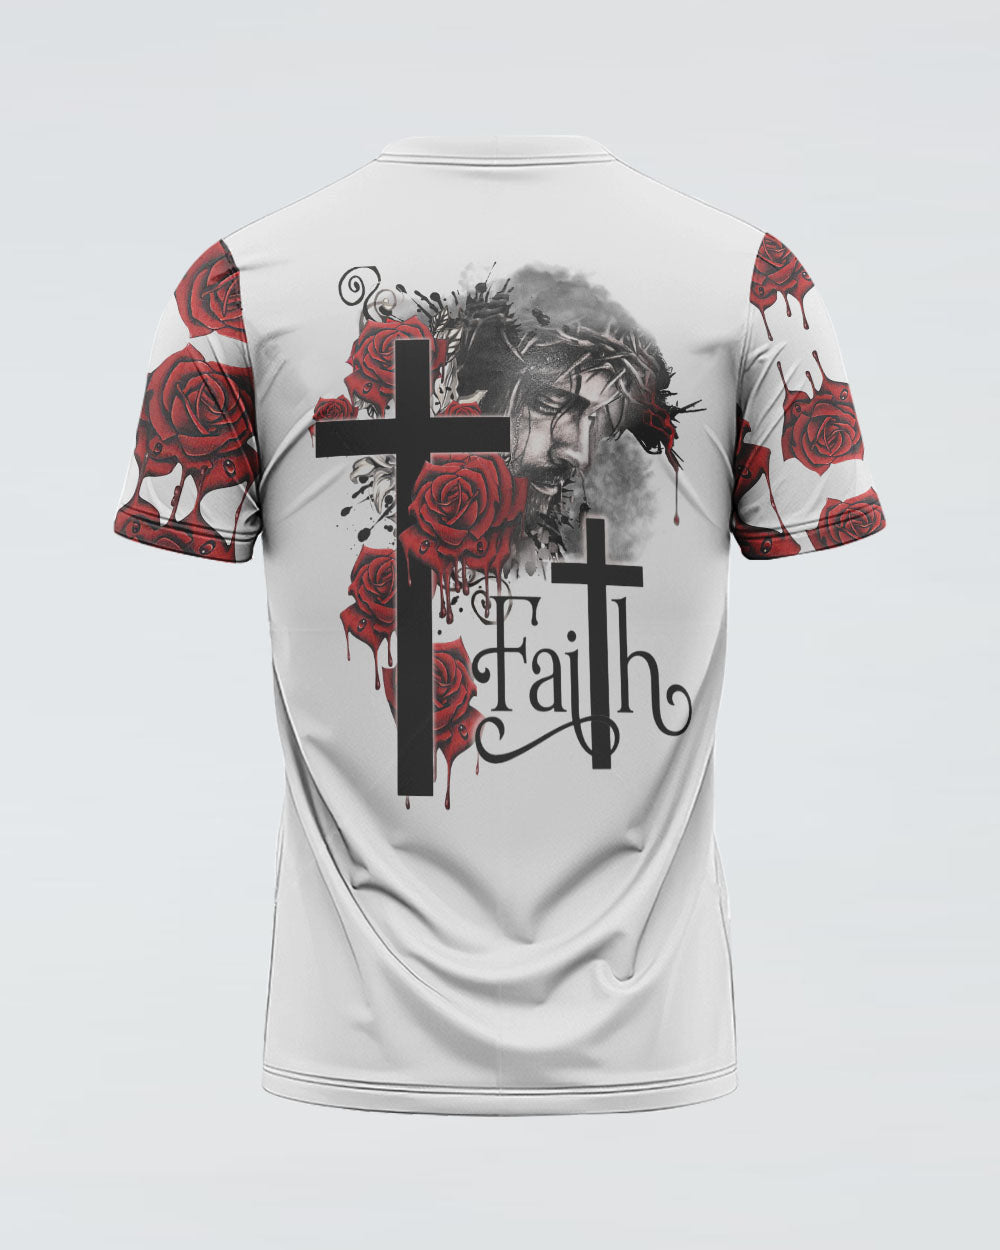 Faith Jesus Rose Watercolor Women's Christian Tshirt